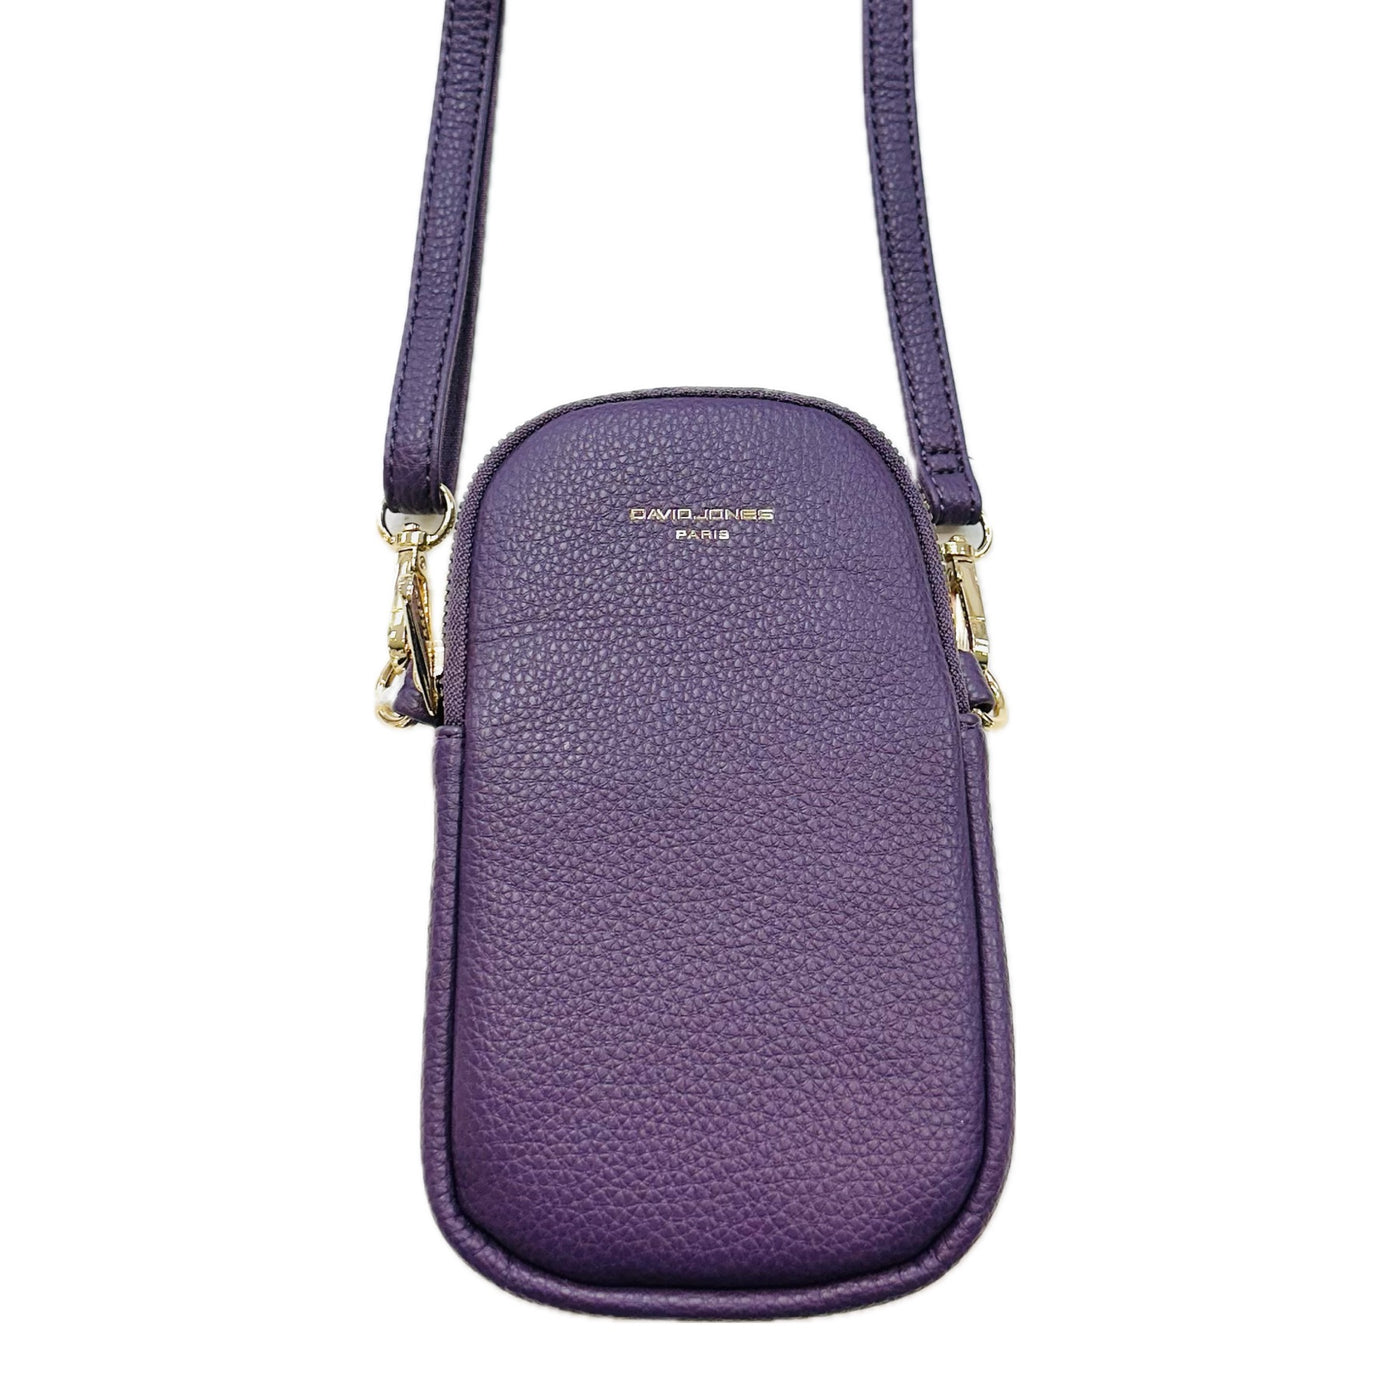 David Jones Double Zip Phone Bag - Purple/Gold Fittings (CM6814A)